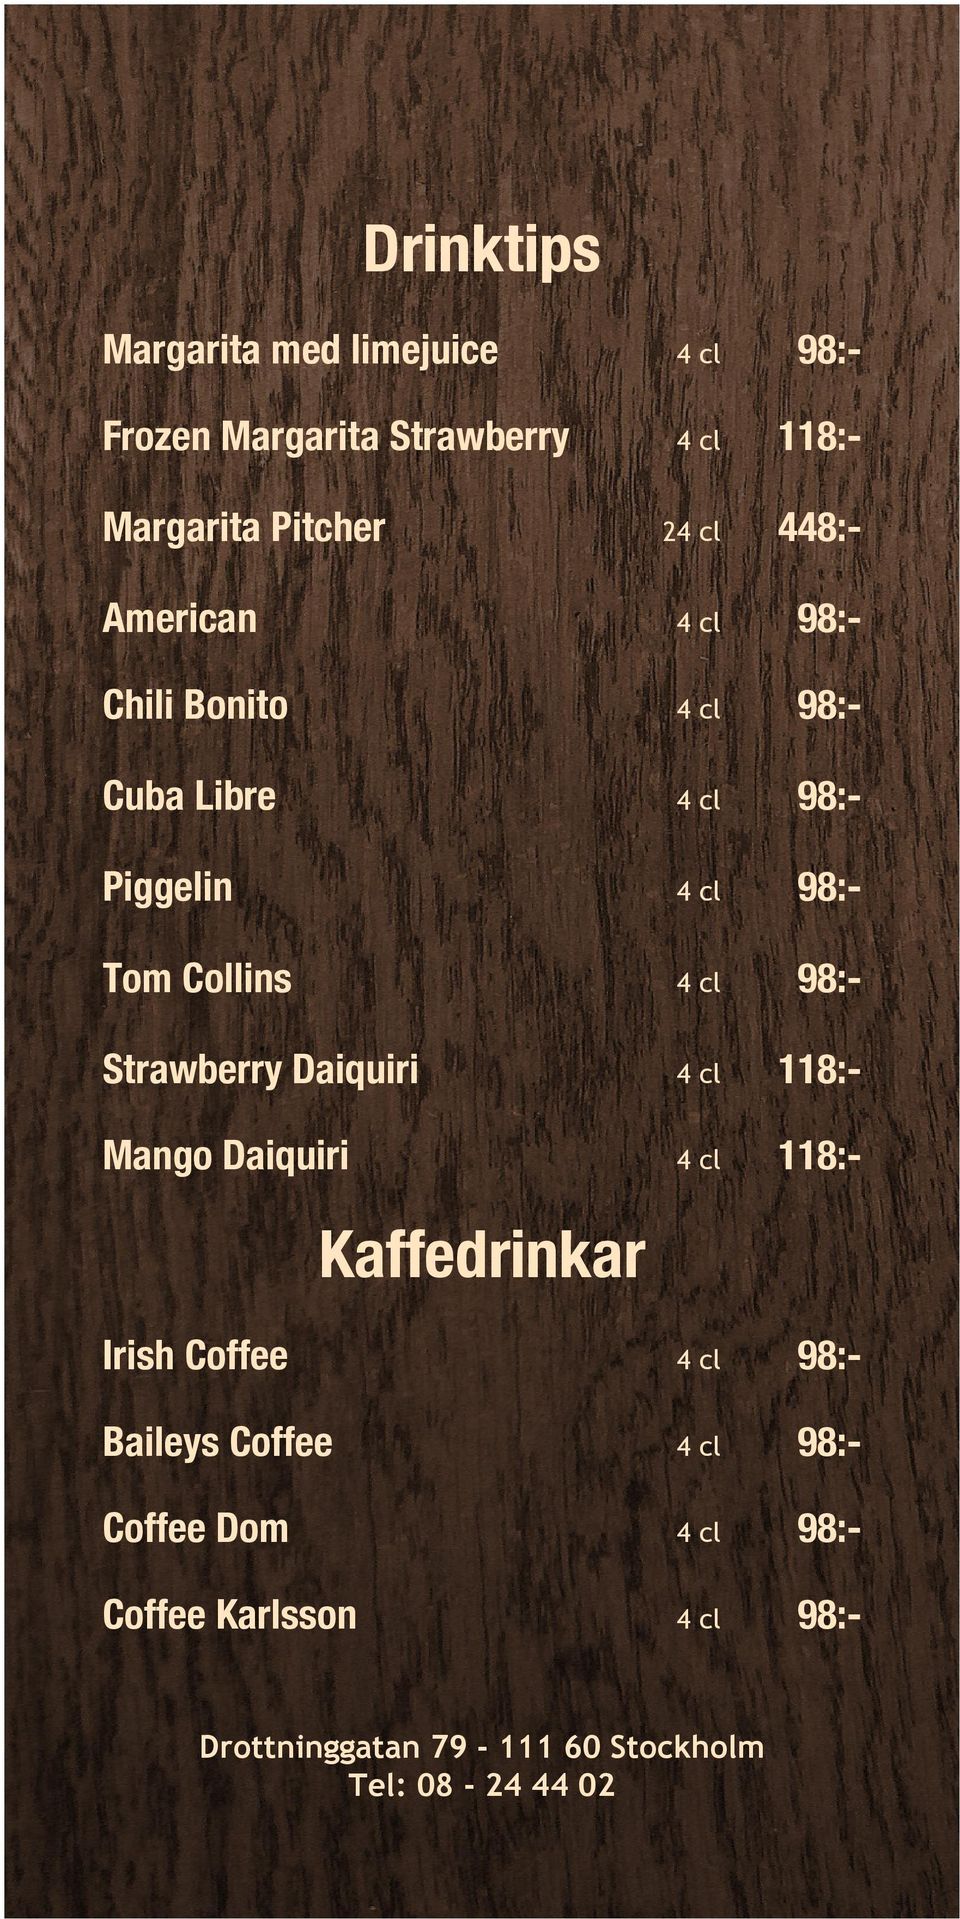 118:- Mango Daiquiri 118:- Irish Coffee Baileys Coffee Coffee Dom Coffee